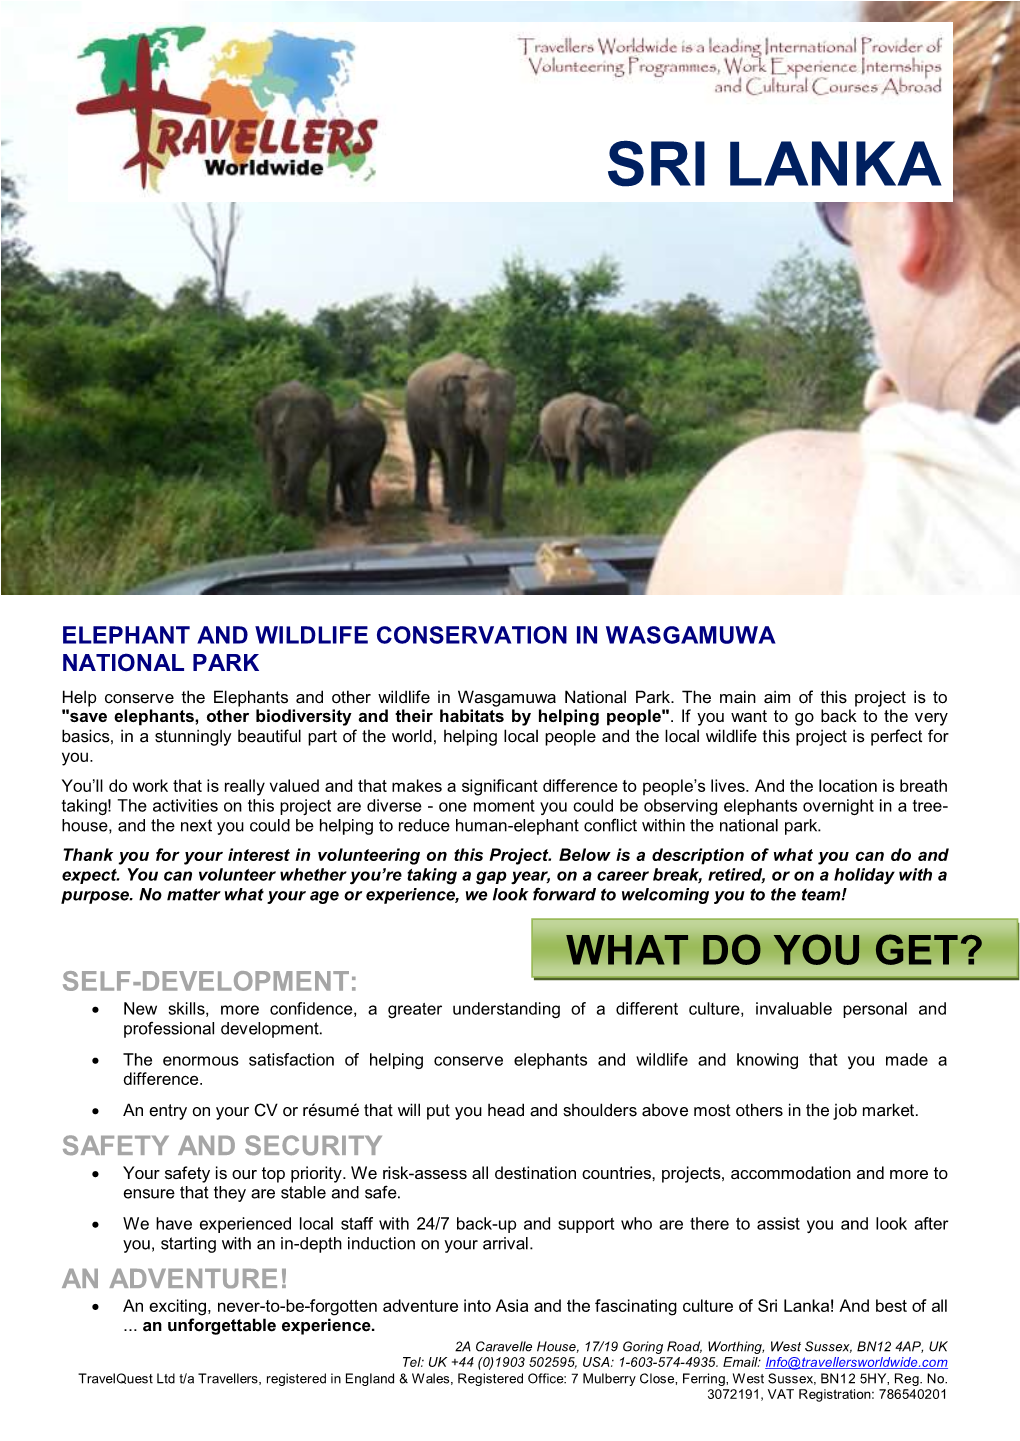 Elephant Conservation in Wasgamuwa, Sri Lanka;